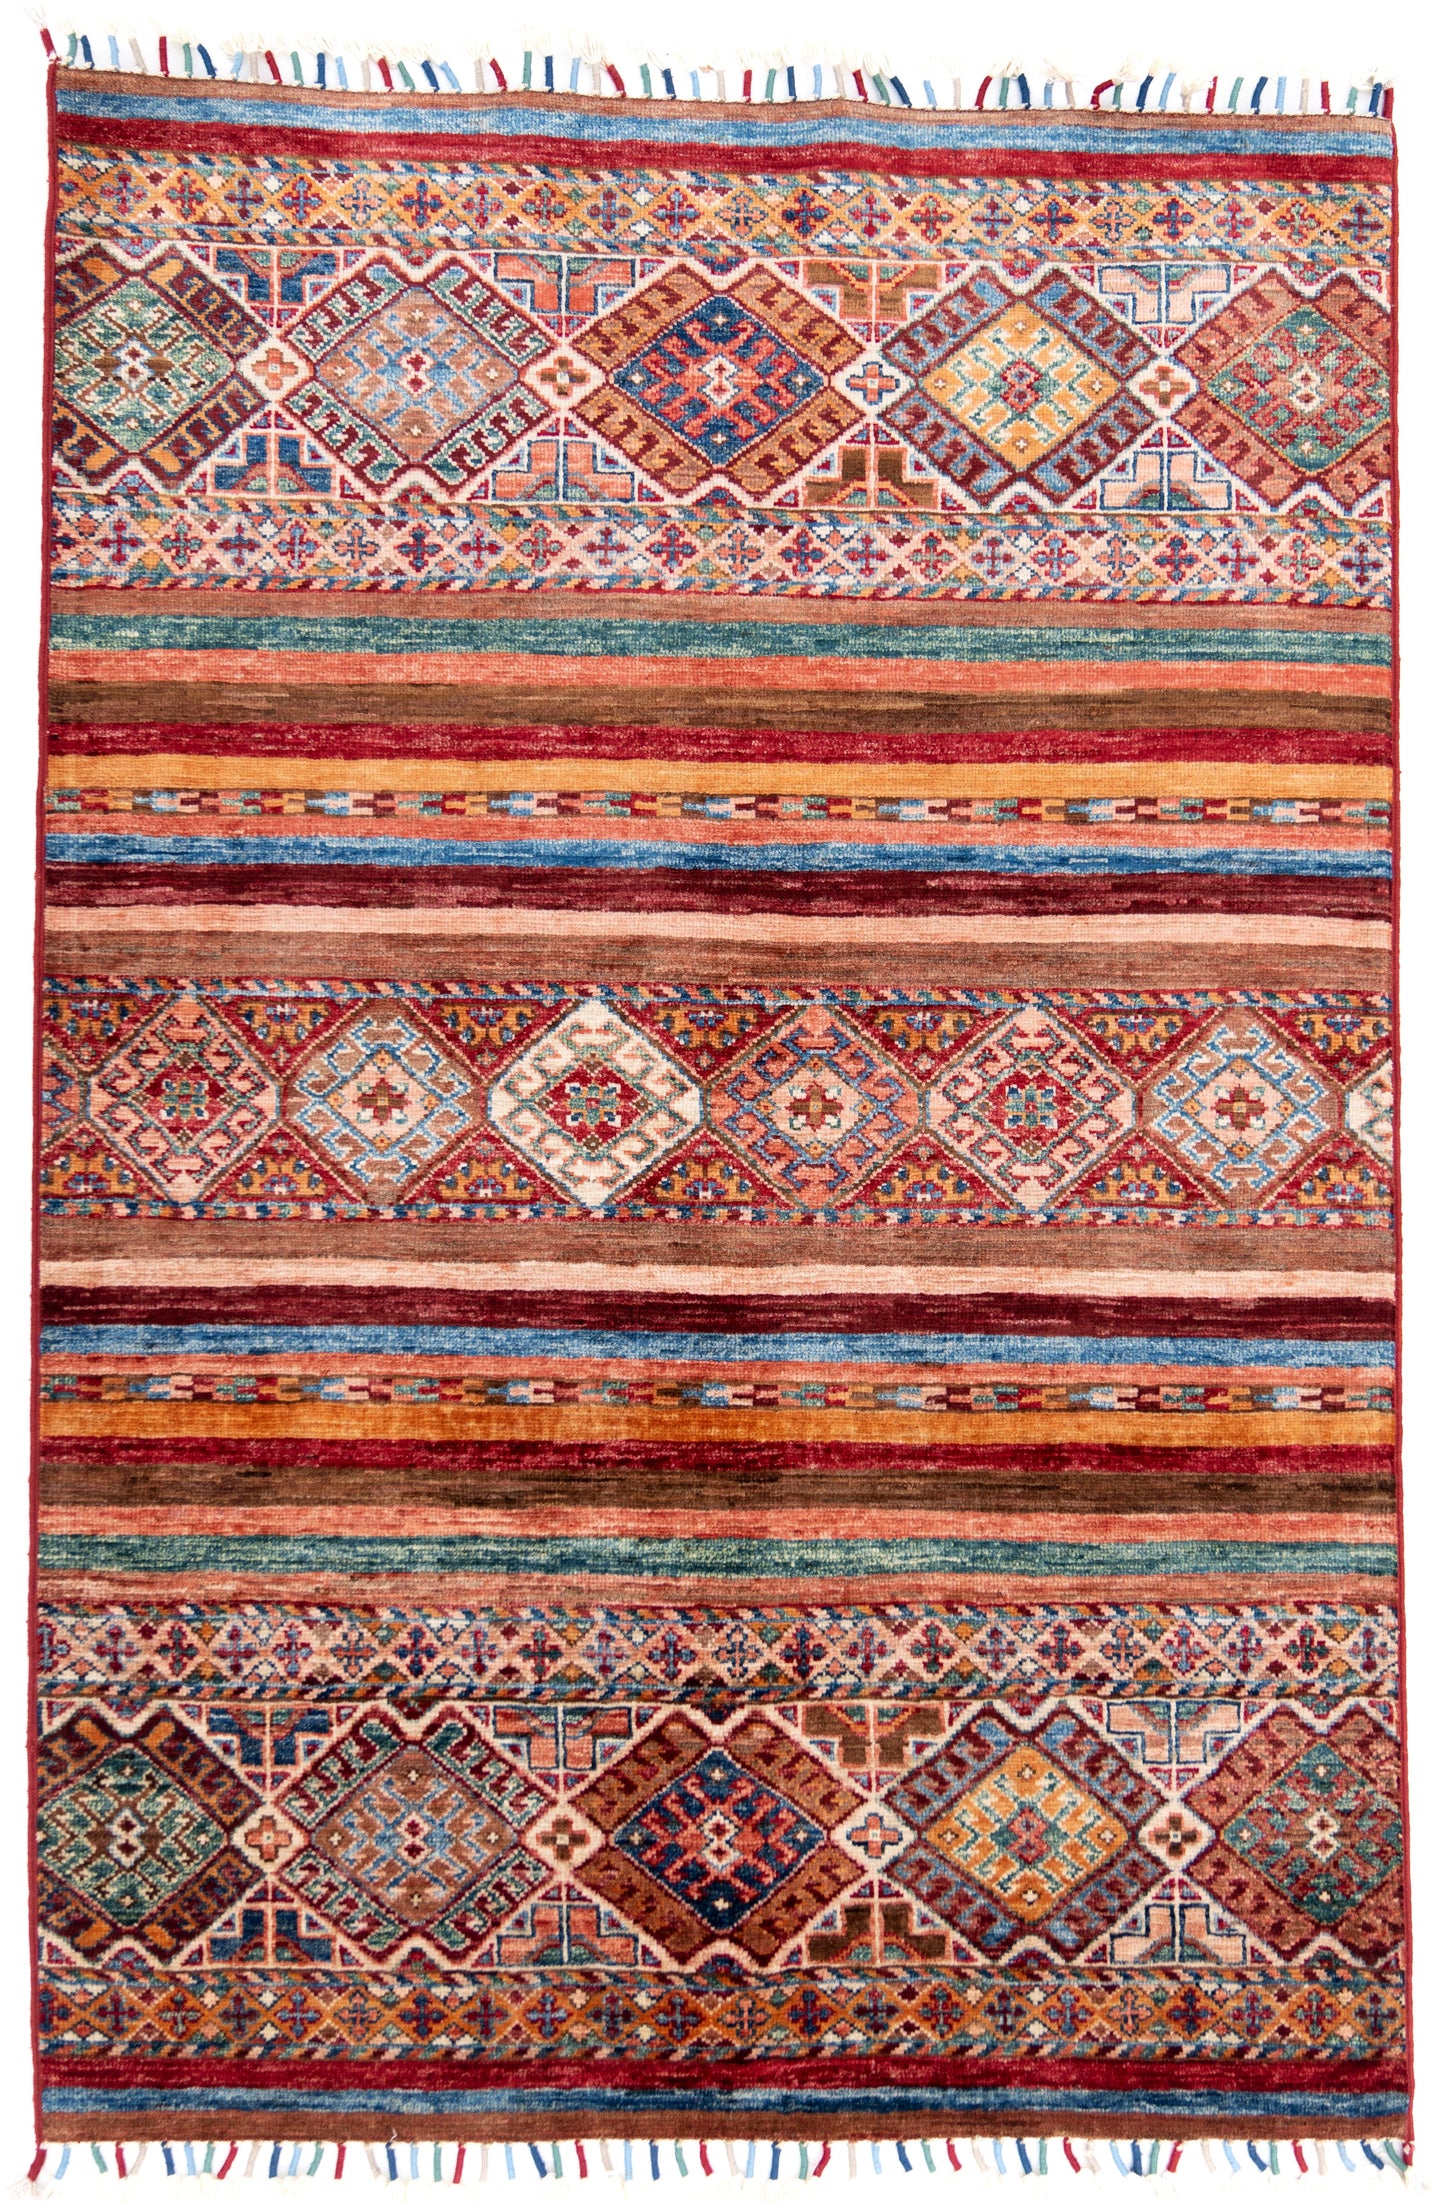 Multicoloured Ariana Rubin Carpet with Multicoloured Tassels